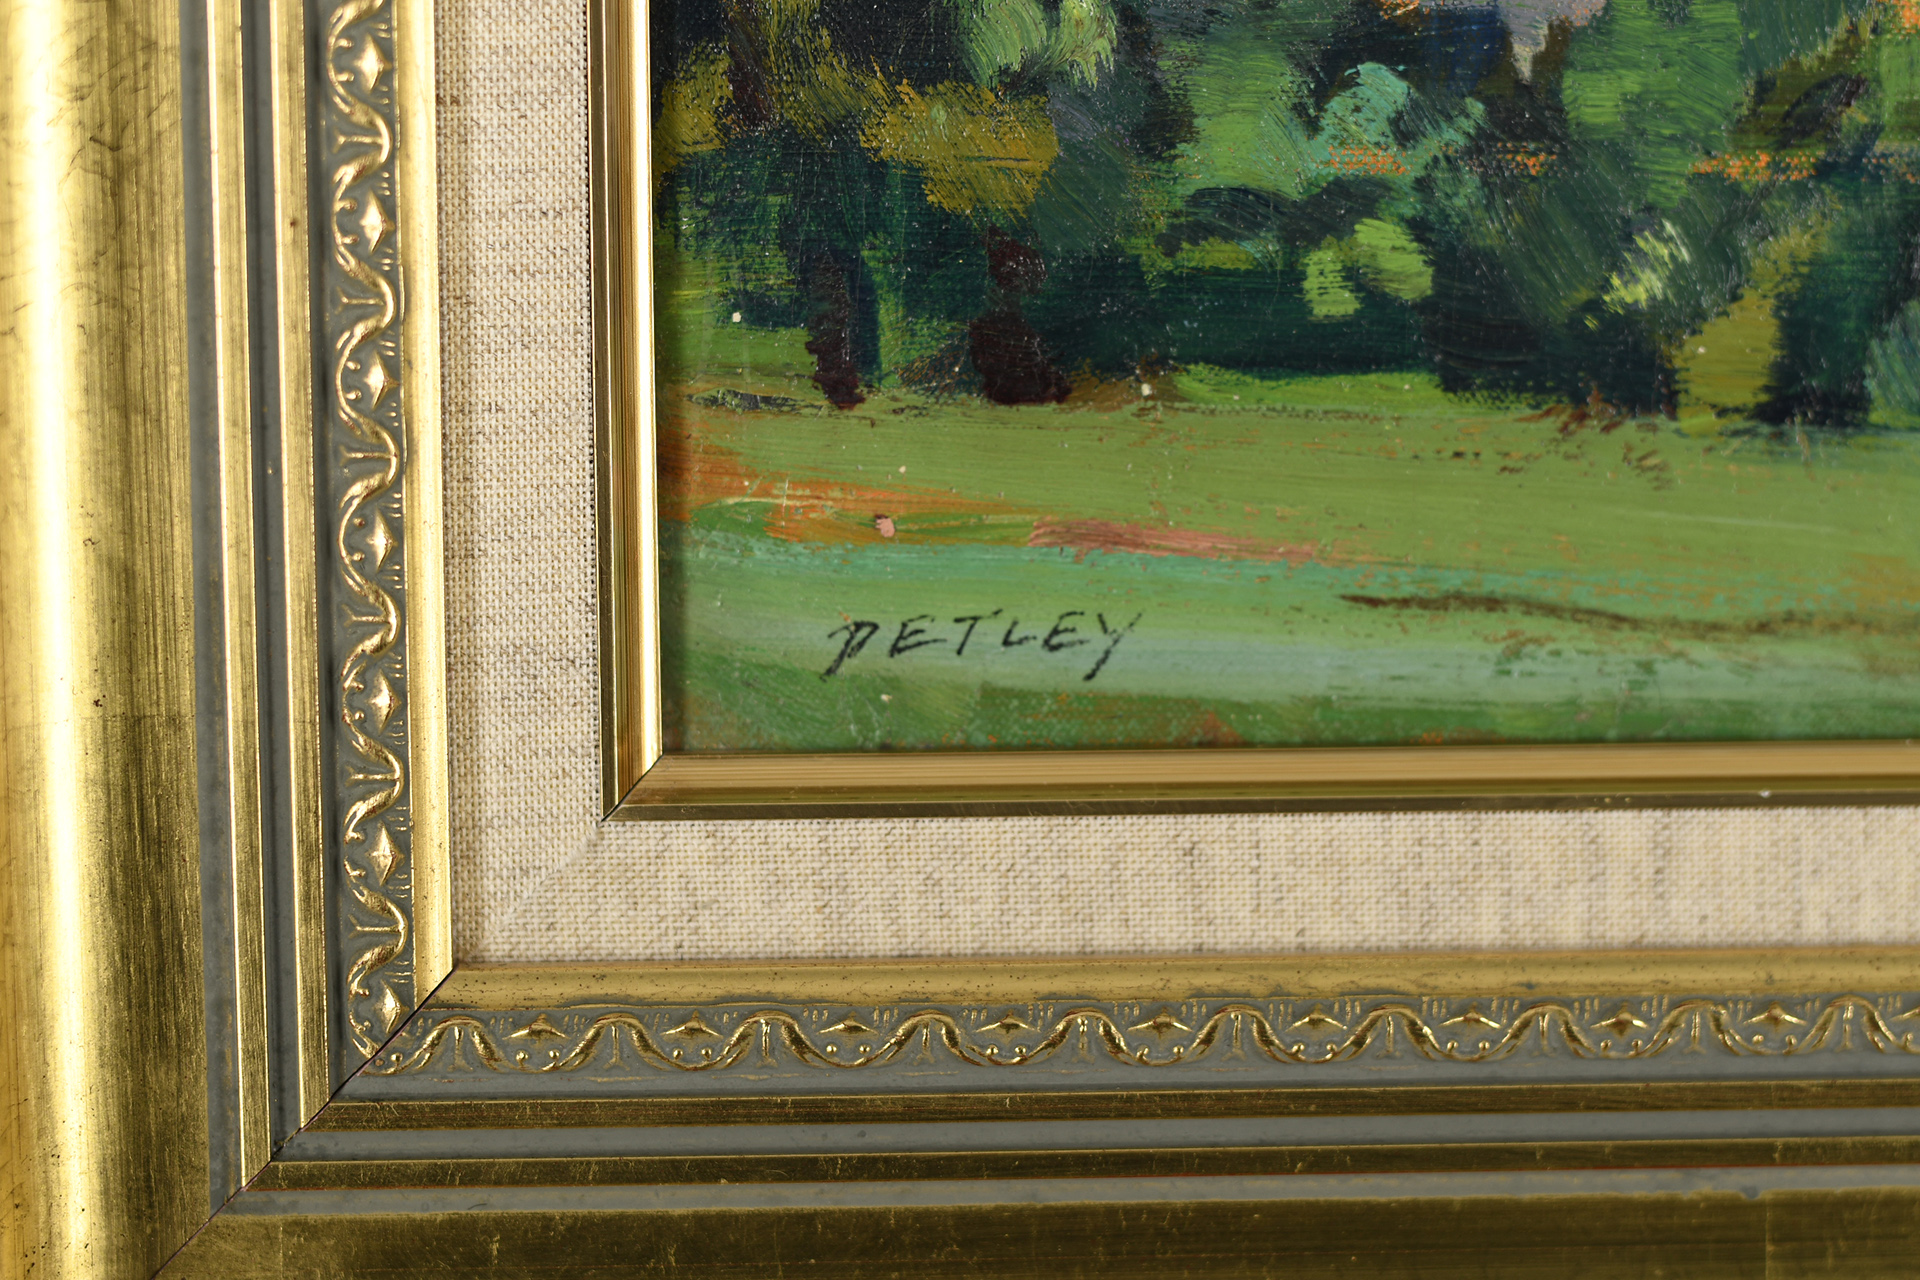 Original Framed Oil on Canvas by Petley